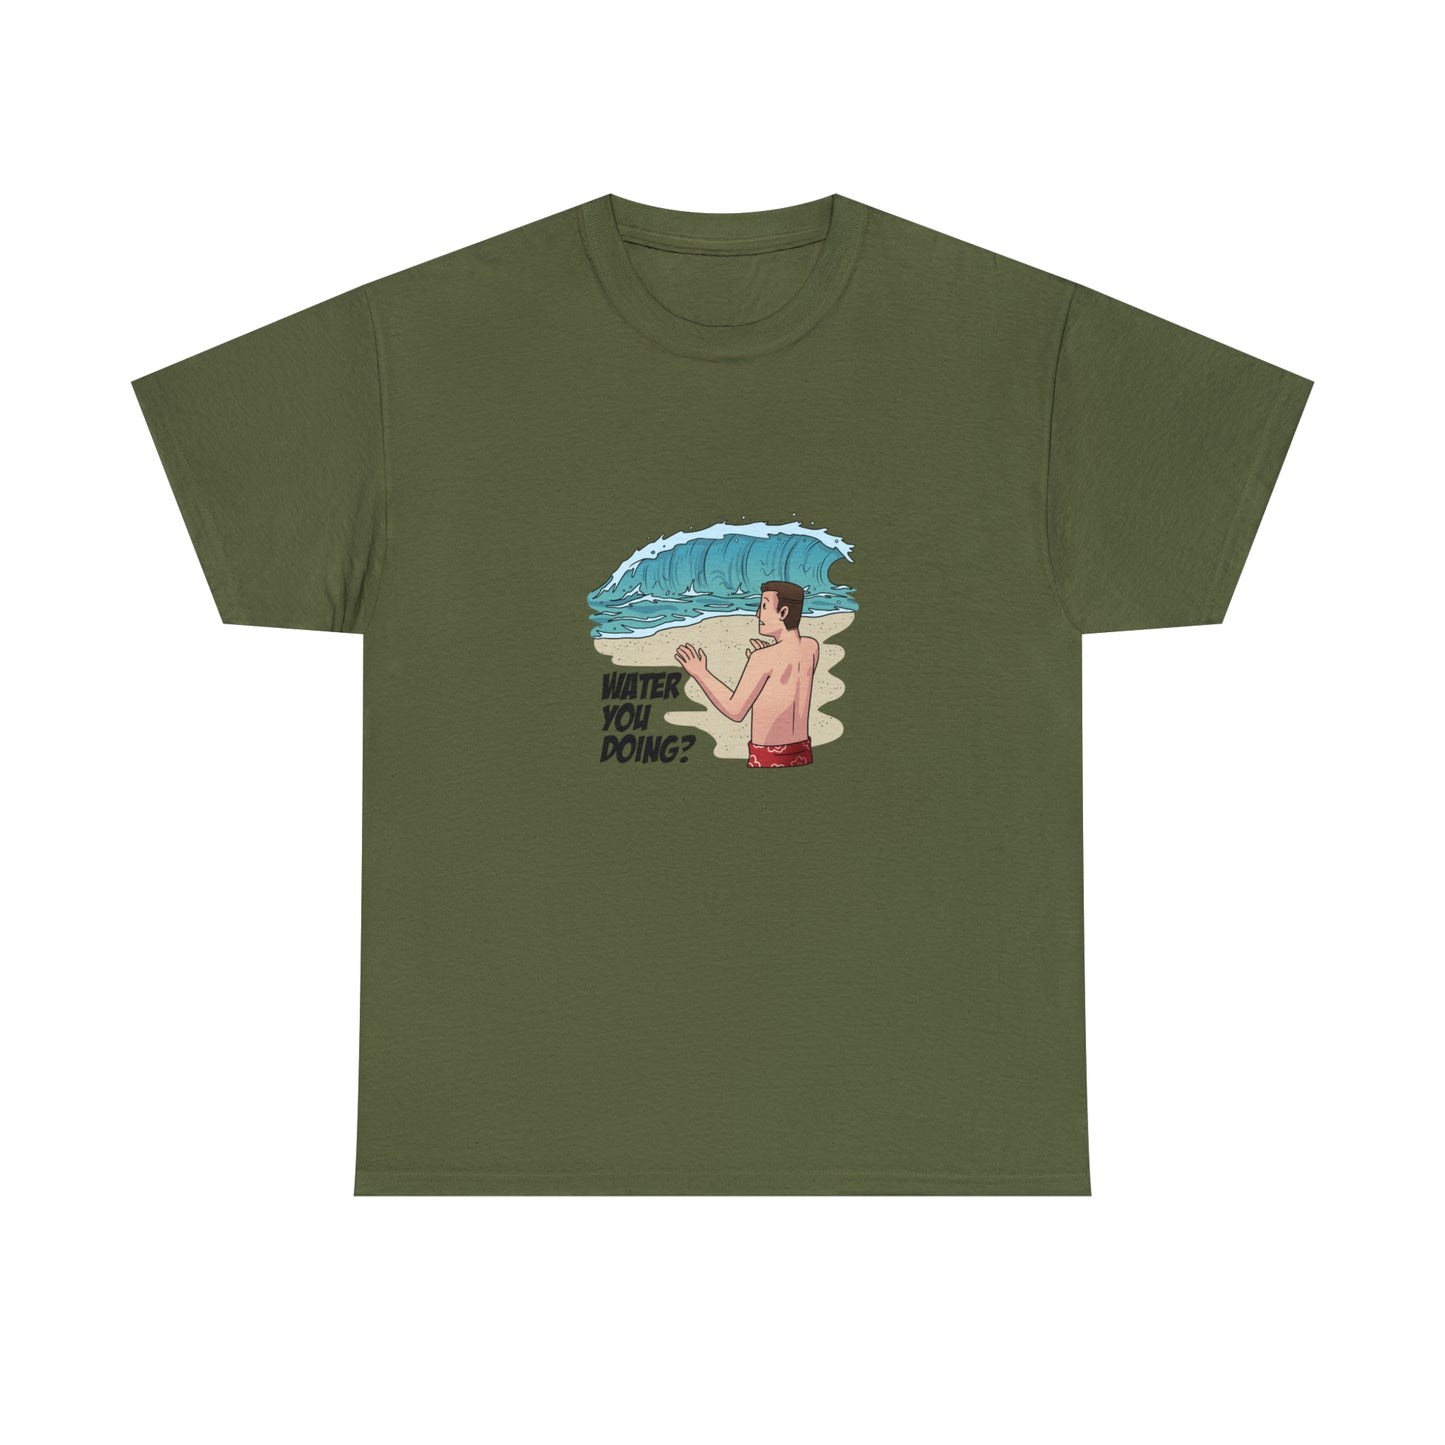 Custom Parody T-shirt, WATER you doing? design